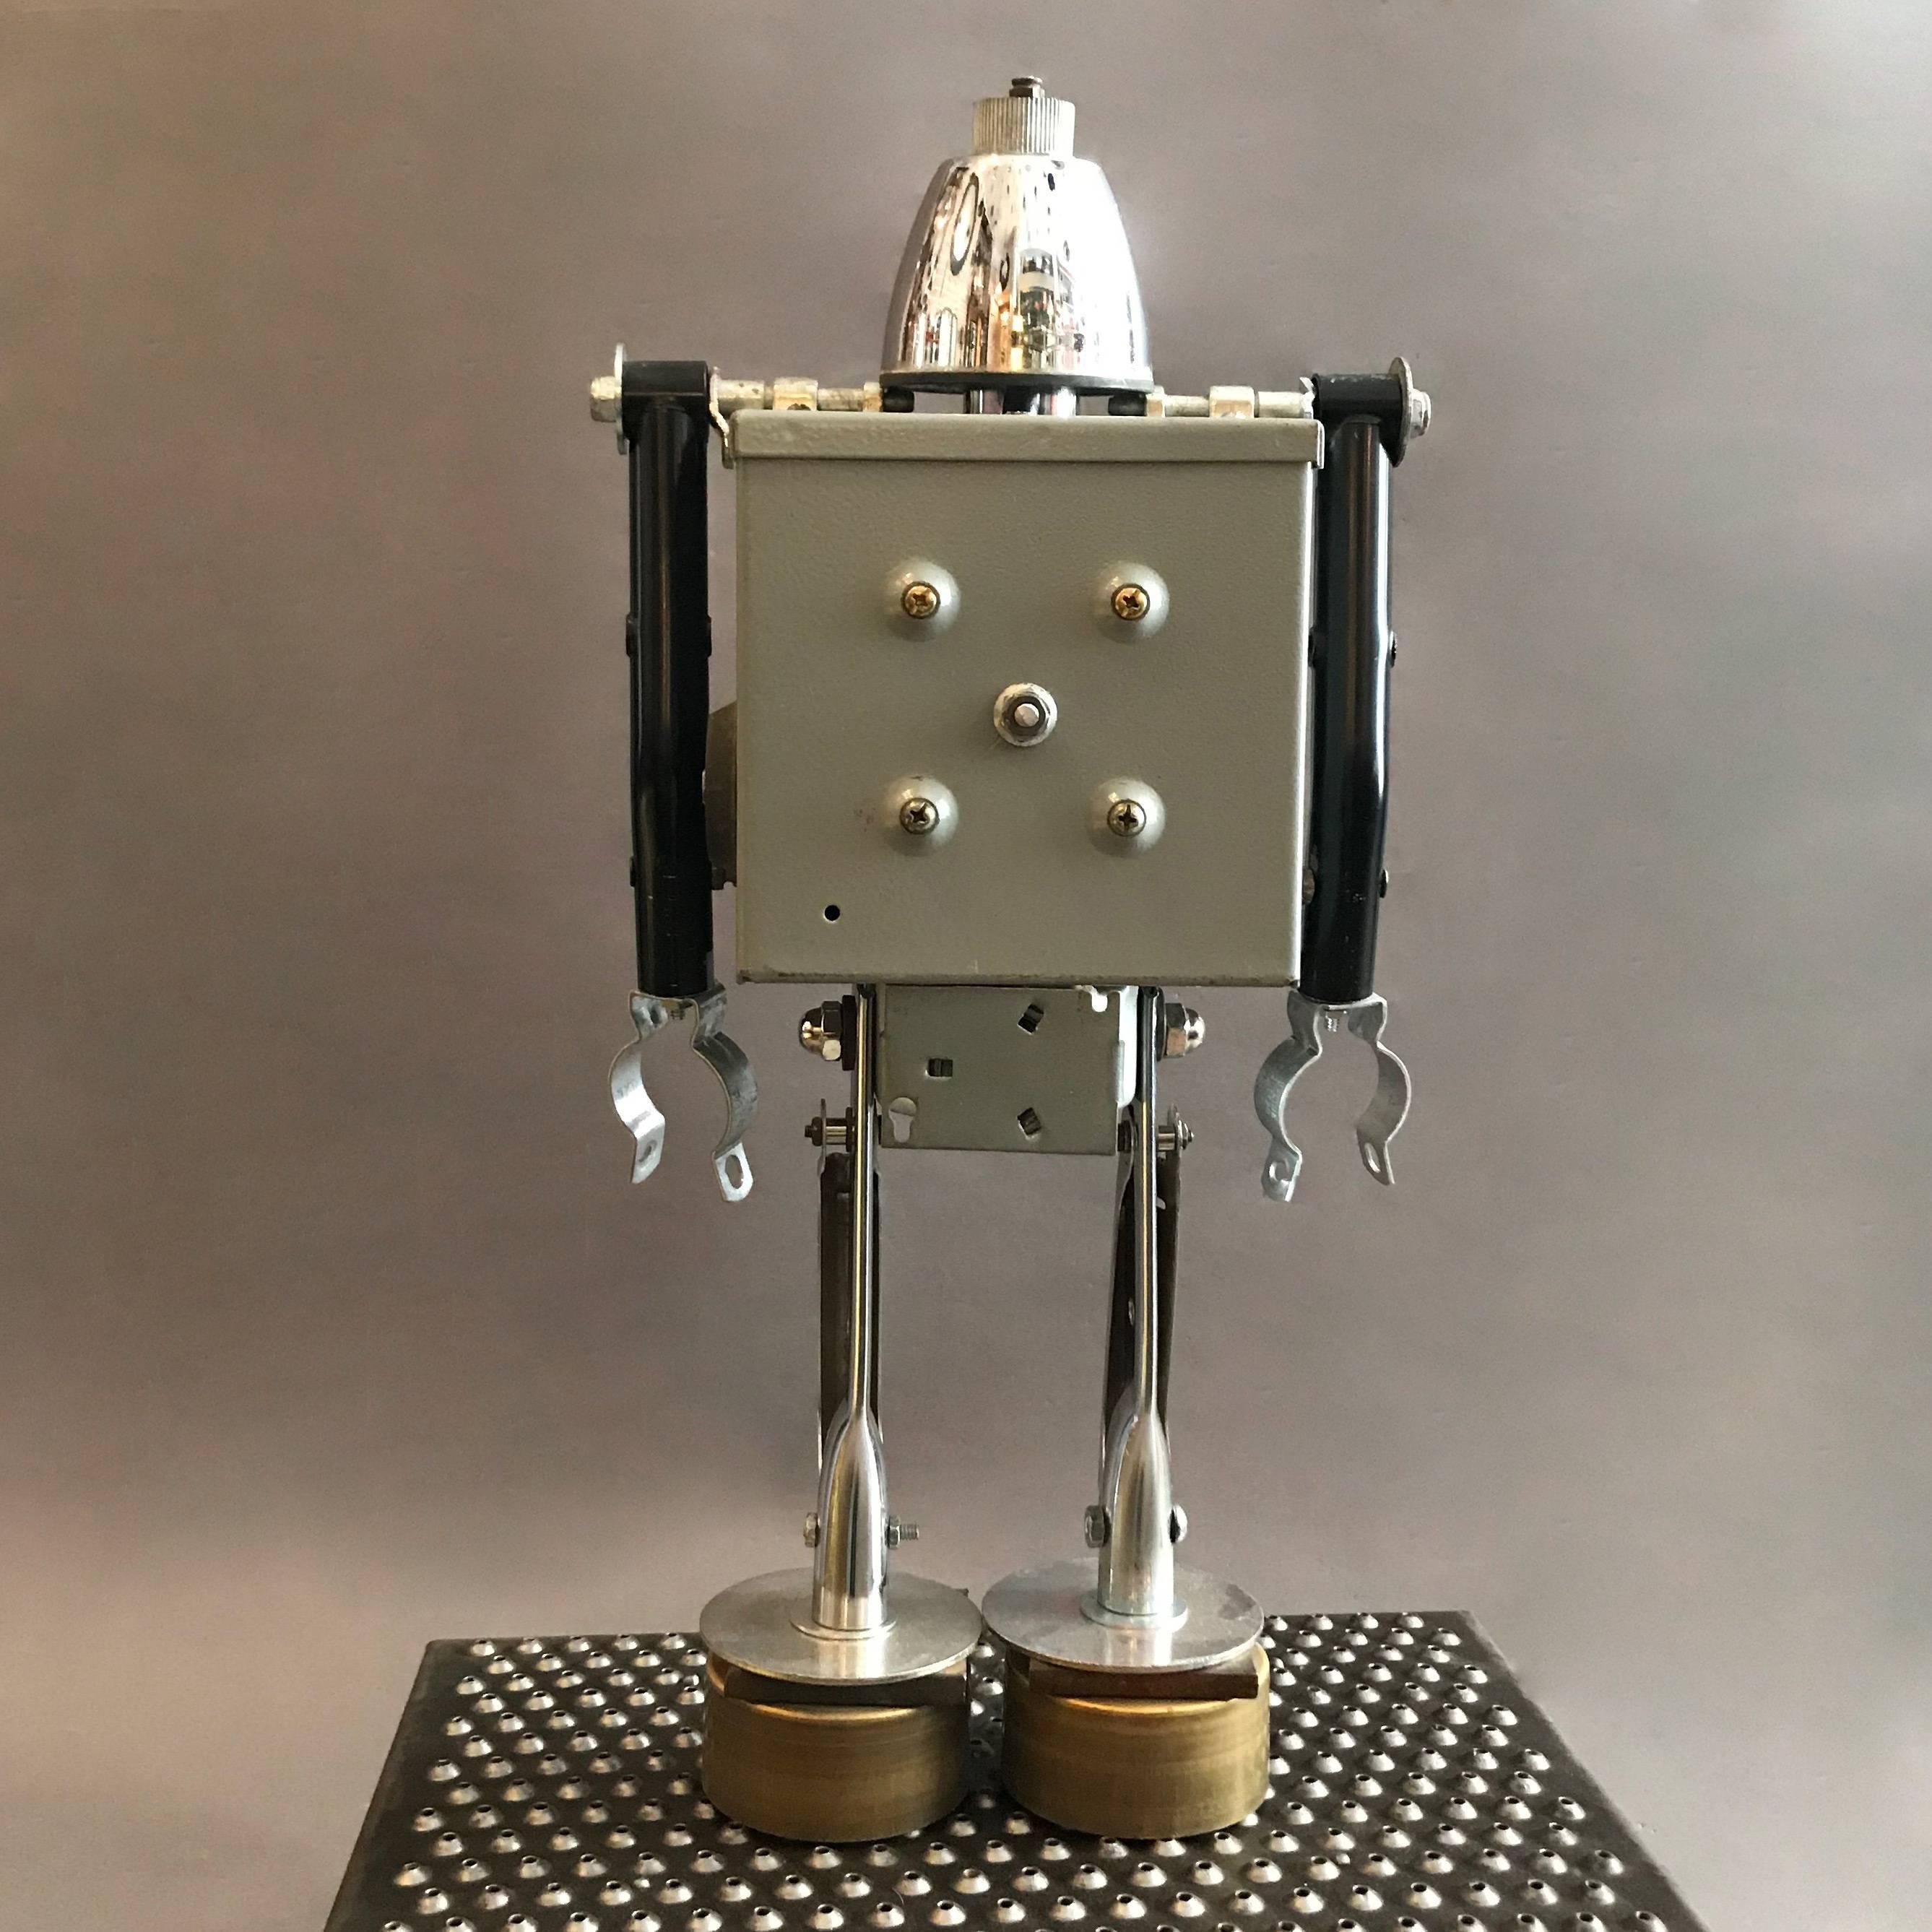 Hand-Crafted Plumbest Robot Sculpture by Bennett Robot Works